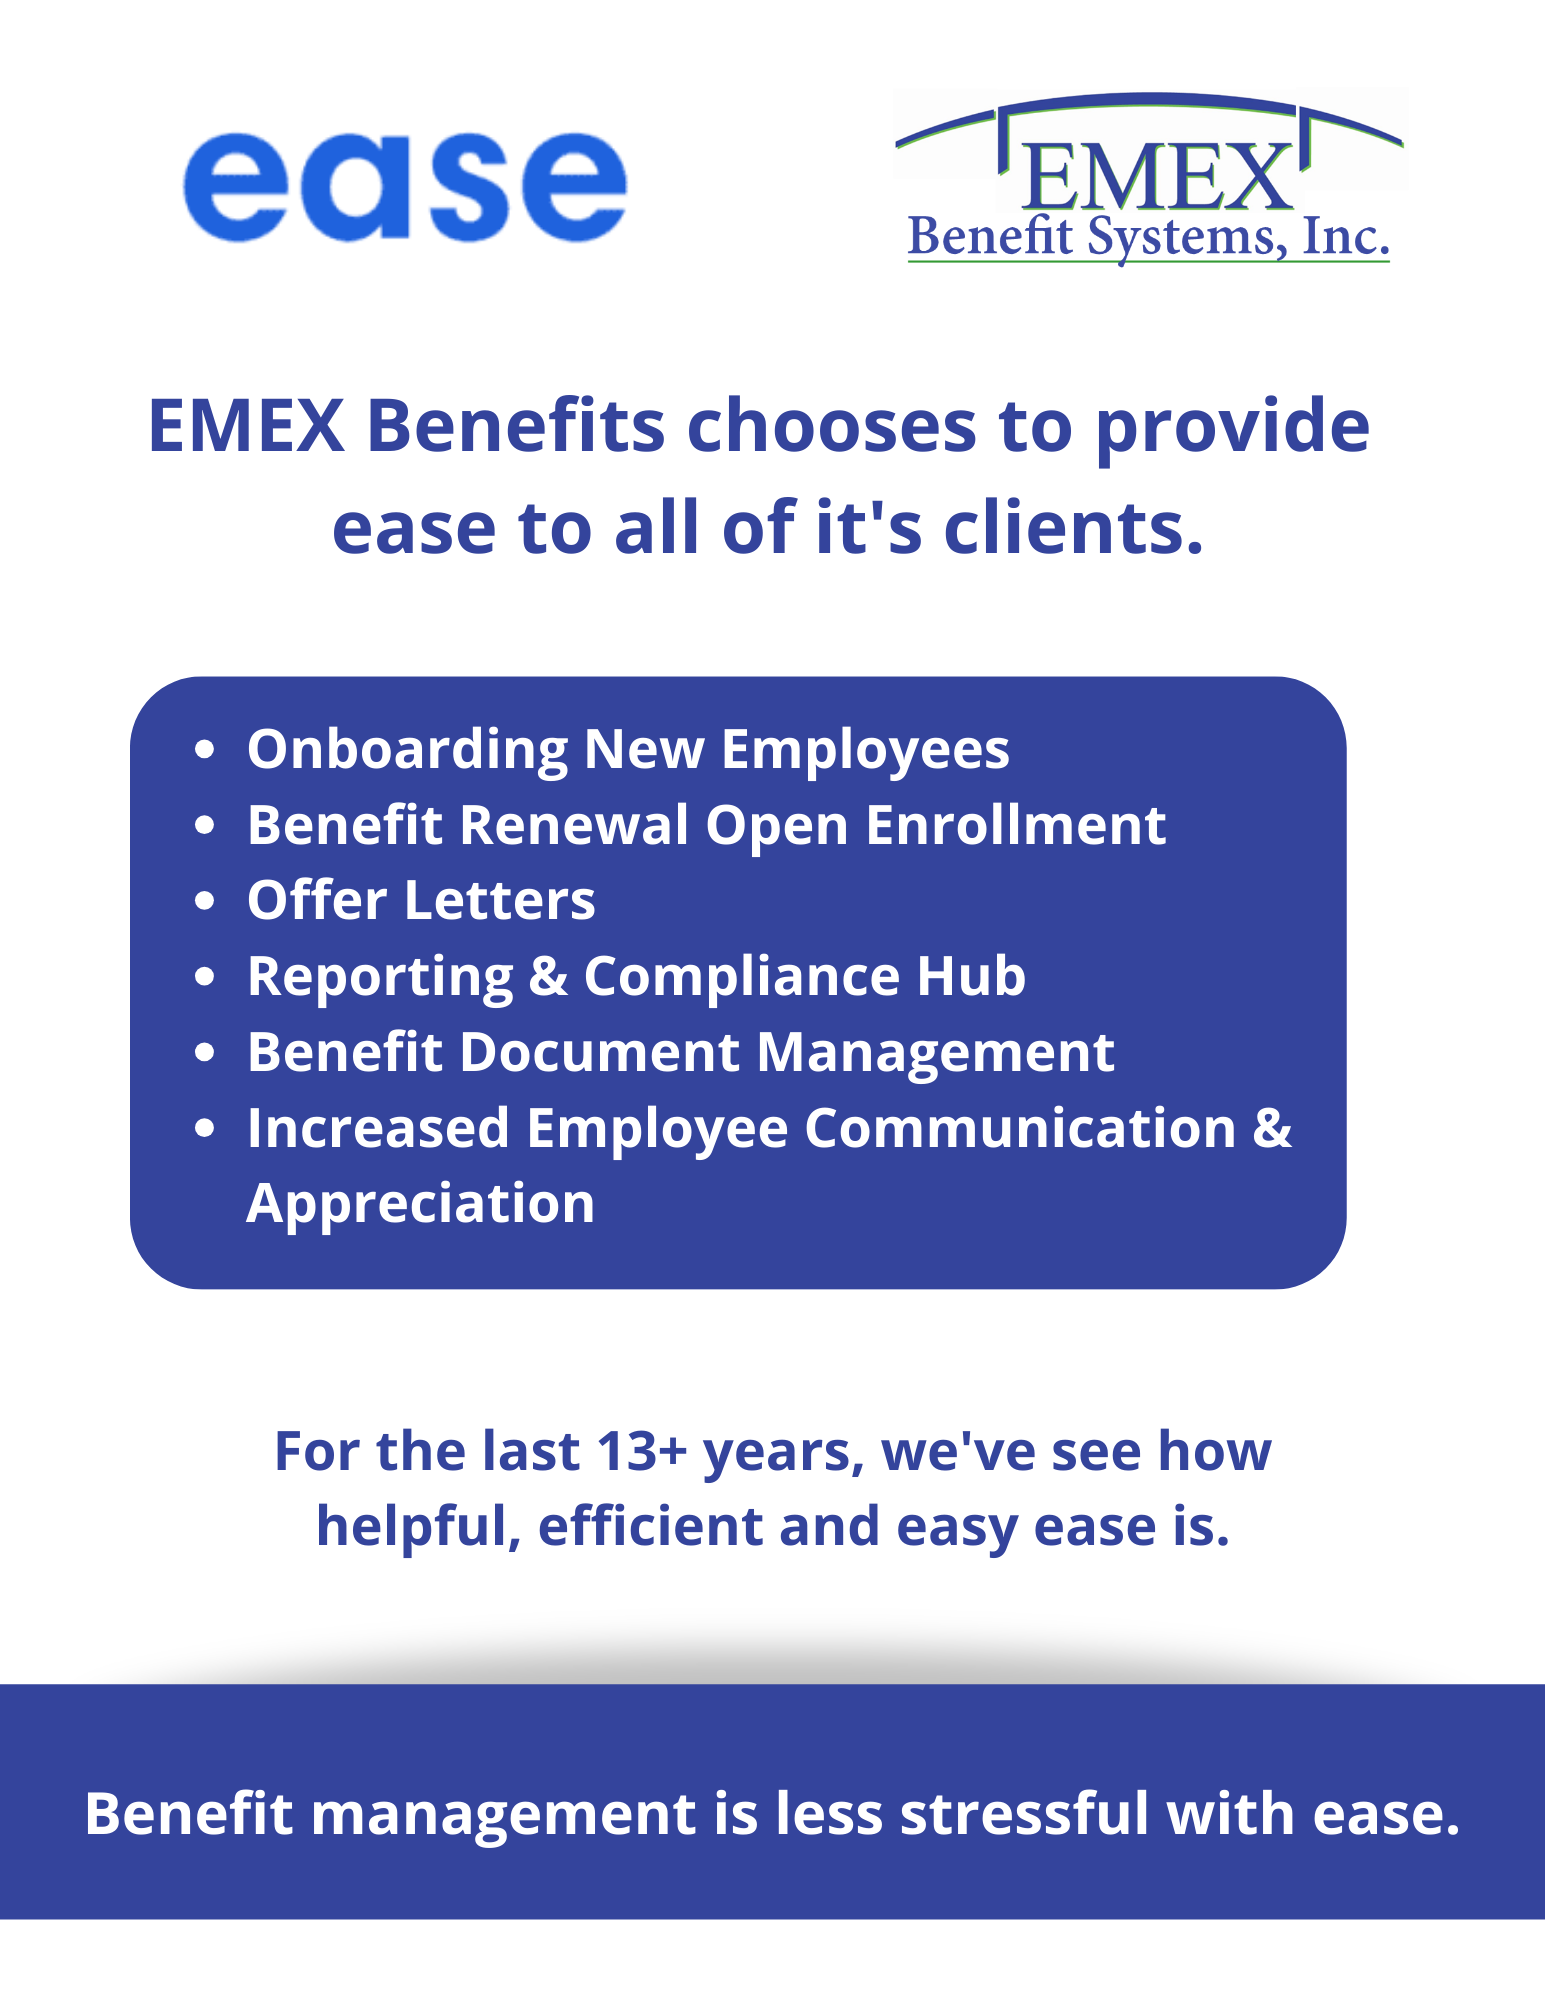 ease online benefit management platform— St Michael, MN — EMEX Benefits Systems